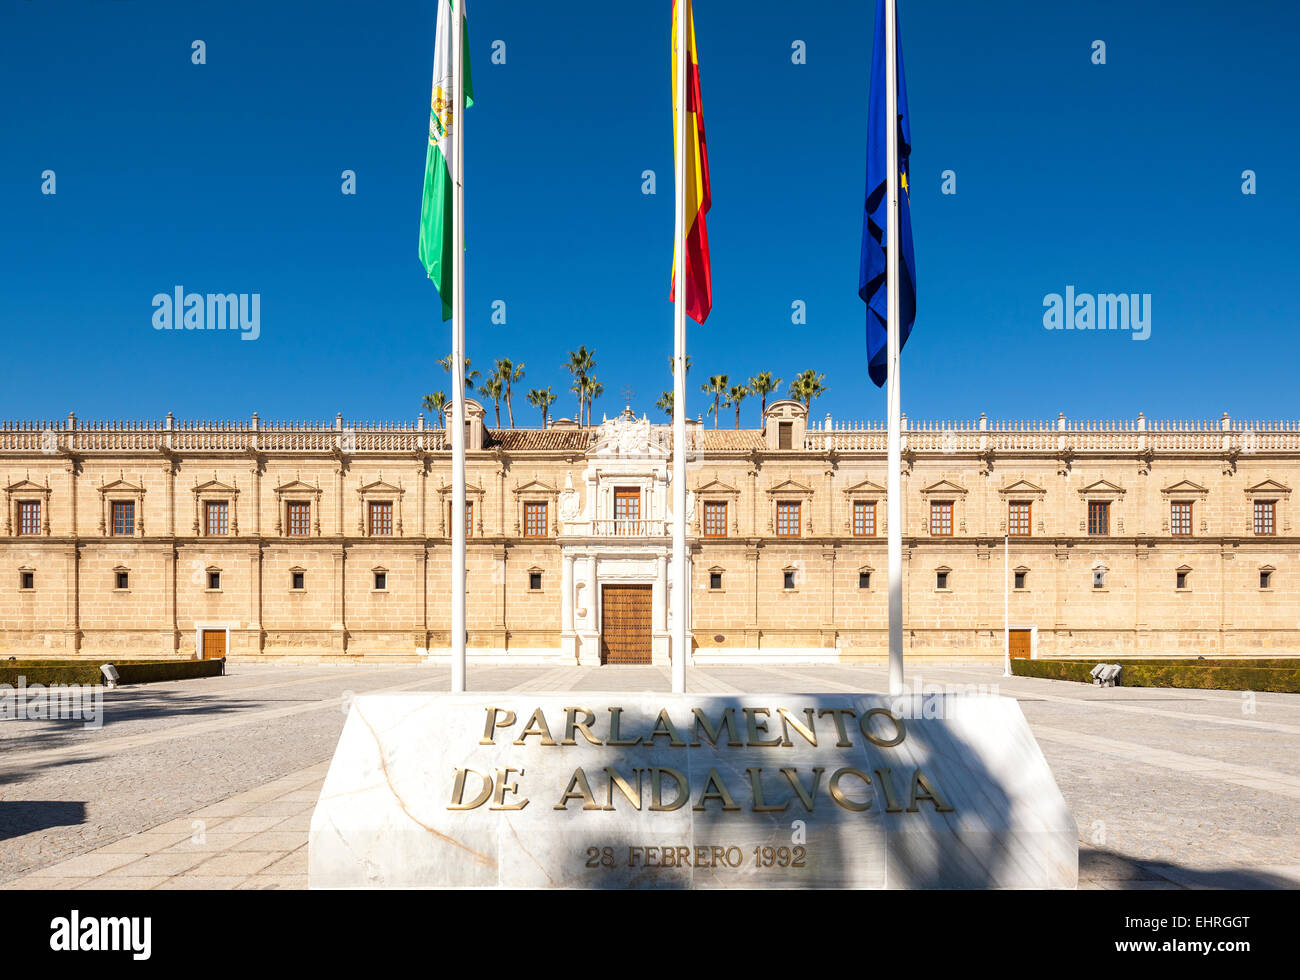 Seville Spain. Parliament of Andalusia in historic Hospital de las Cinco Llagas building. Autonomous regional government. Stock Photo